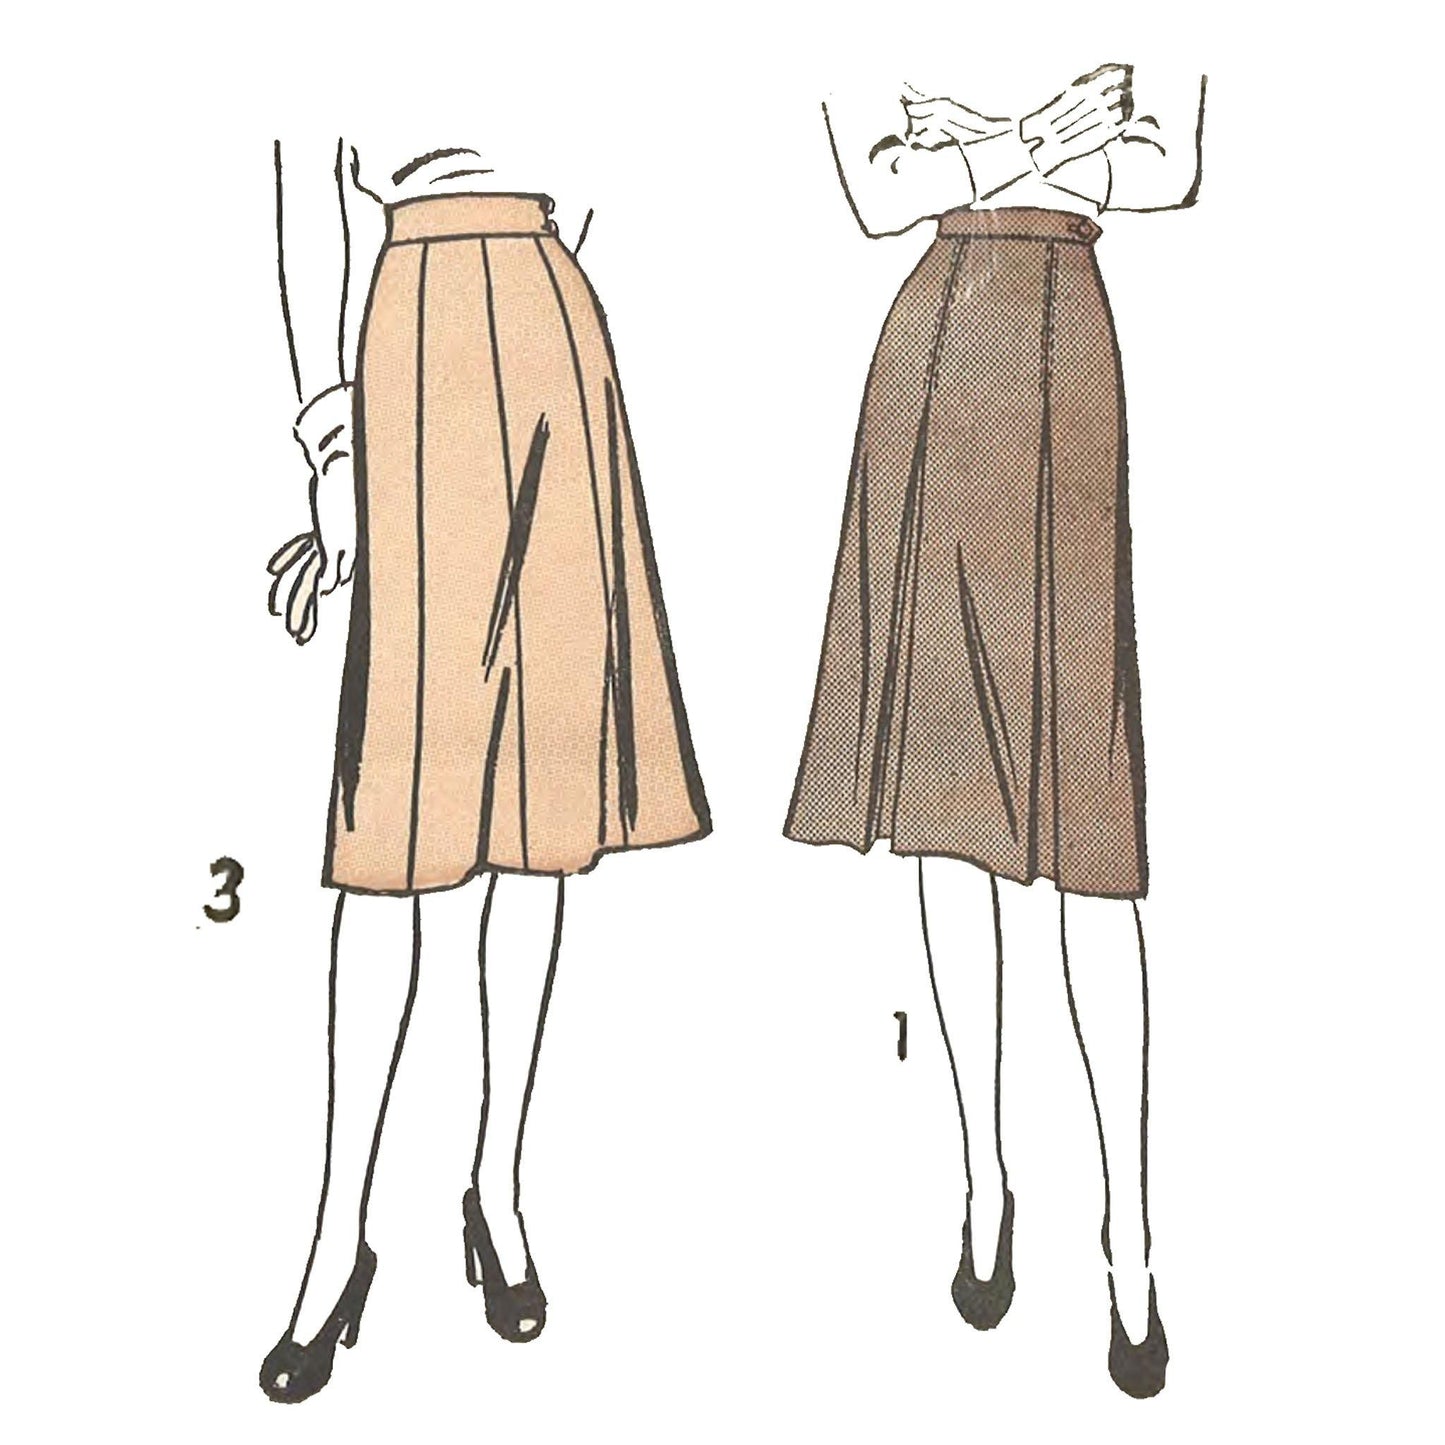 Women wearing skirts.